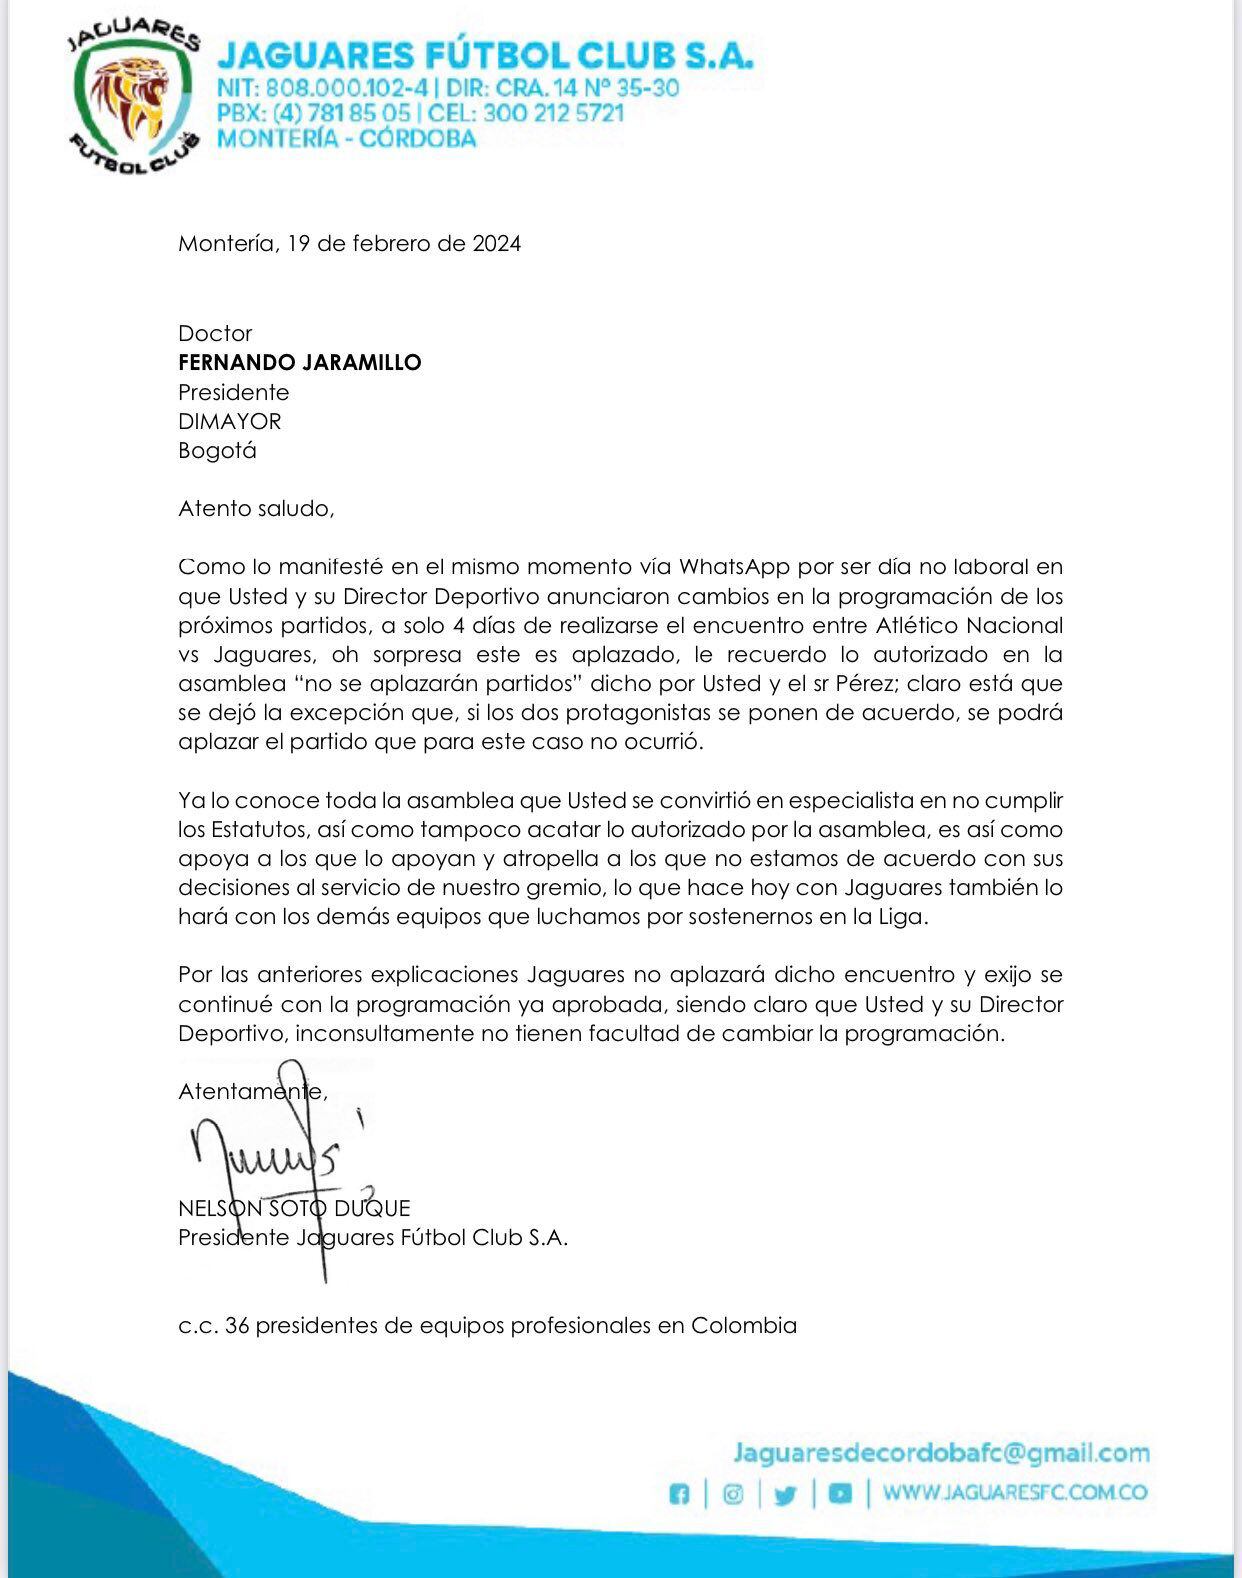 Carta de Jaguares enviada al presidente de la Dimayor Fernando Jaramillo